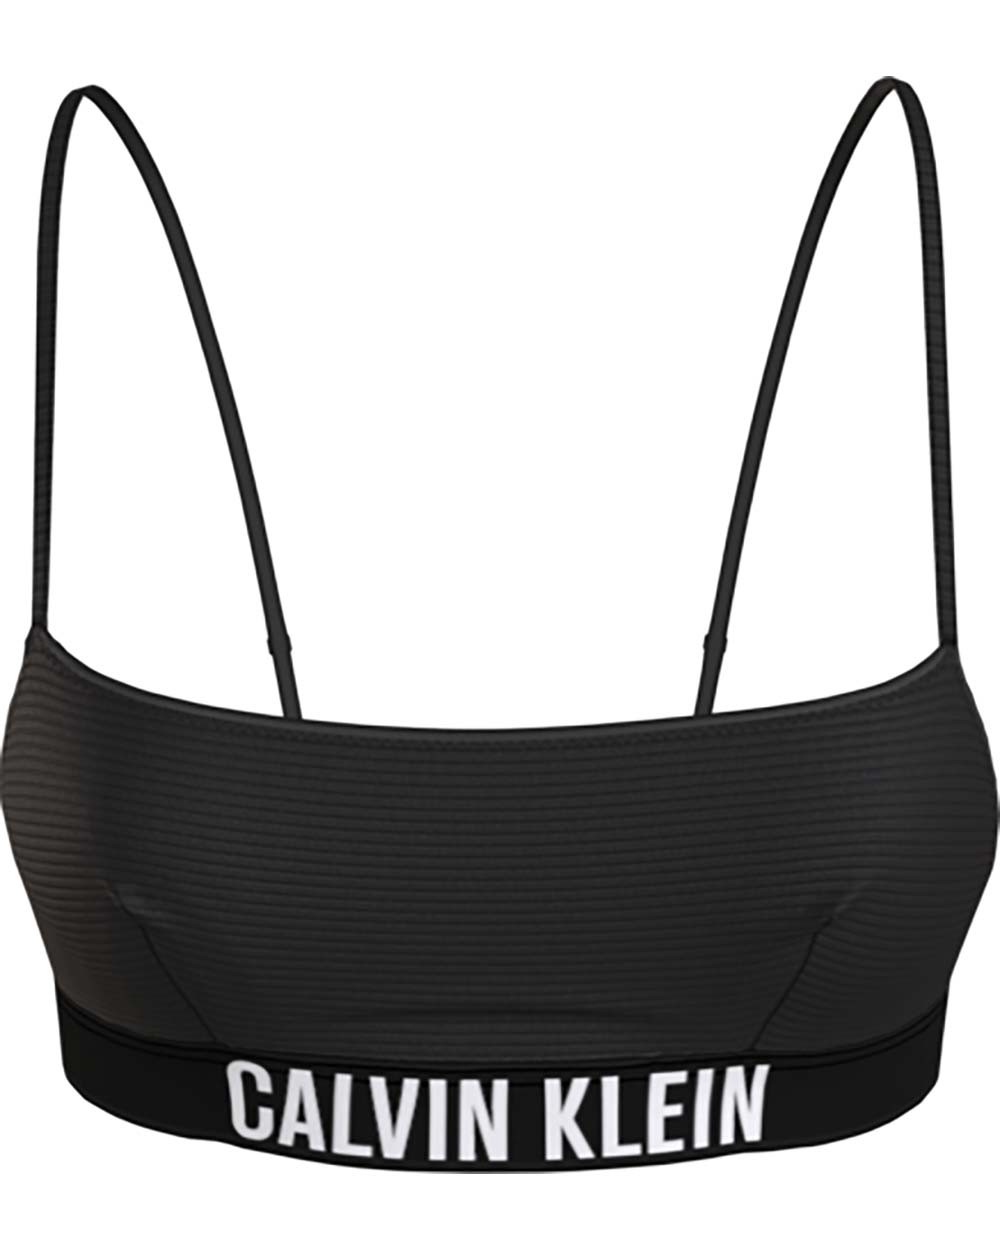 CALVIN KLEIN KW0KW01969 - Bikini top